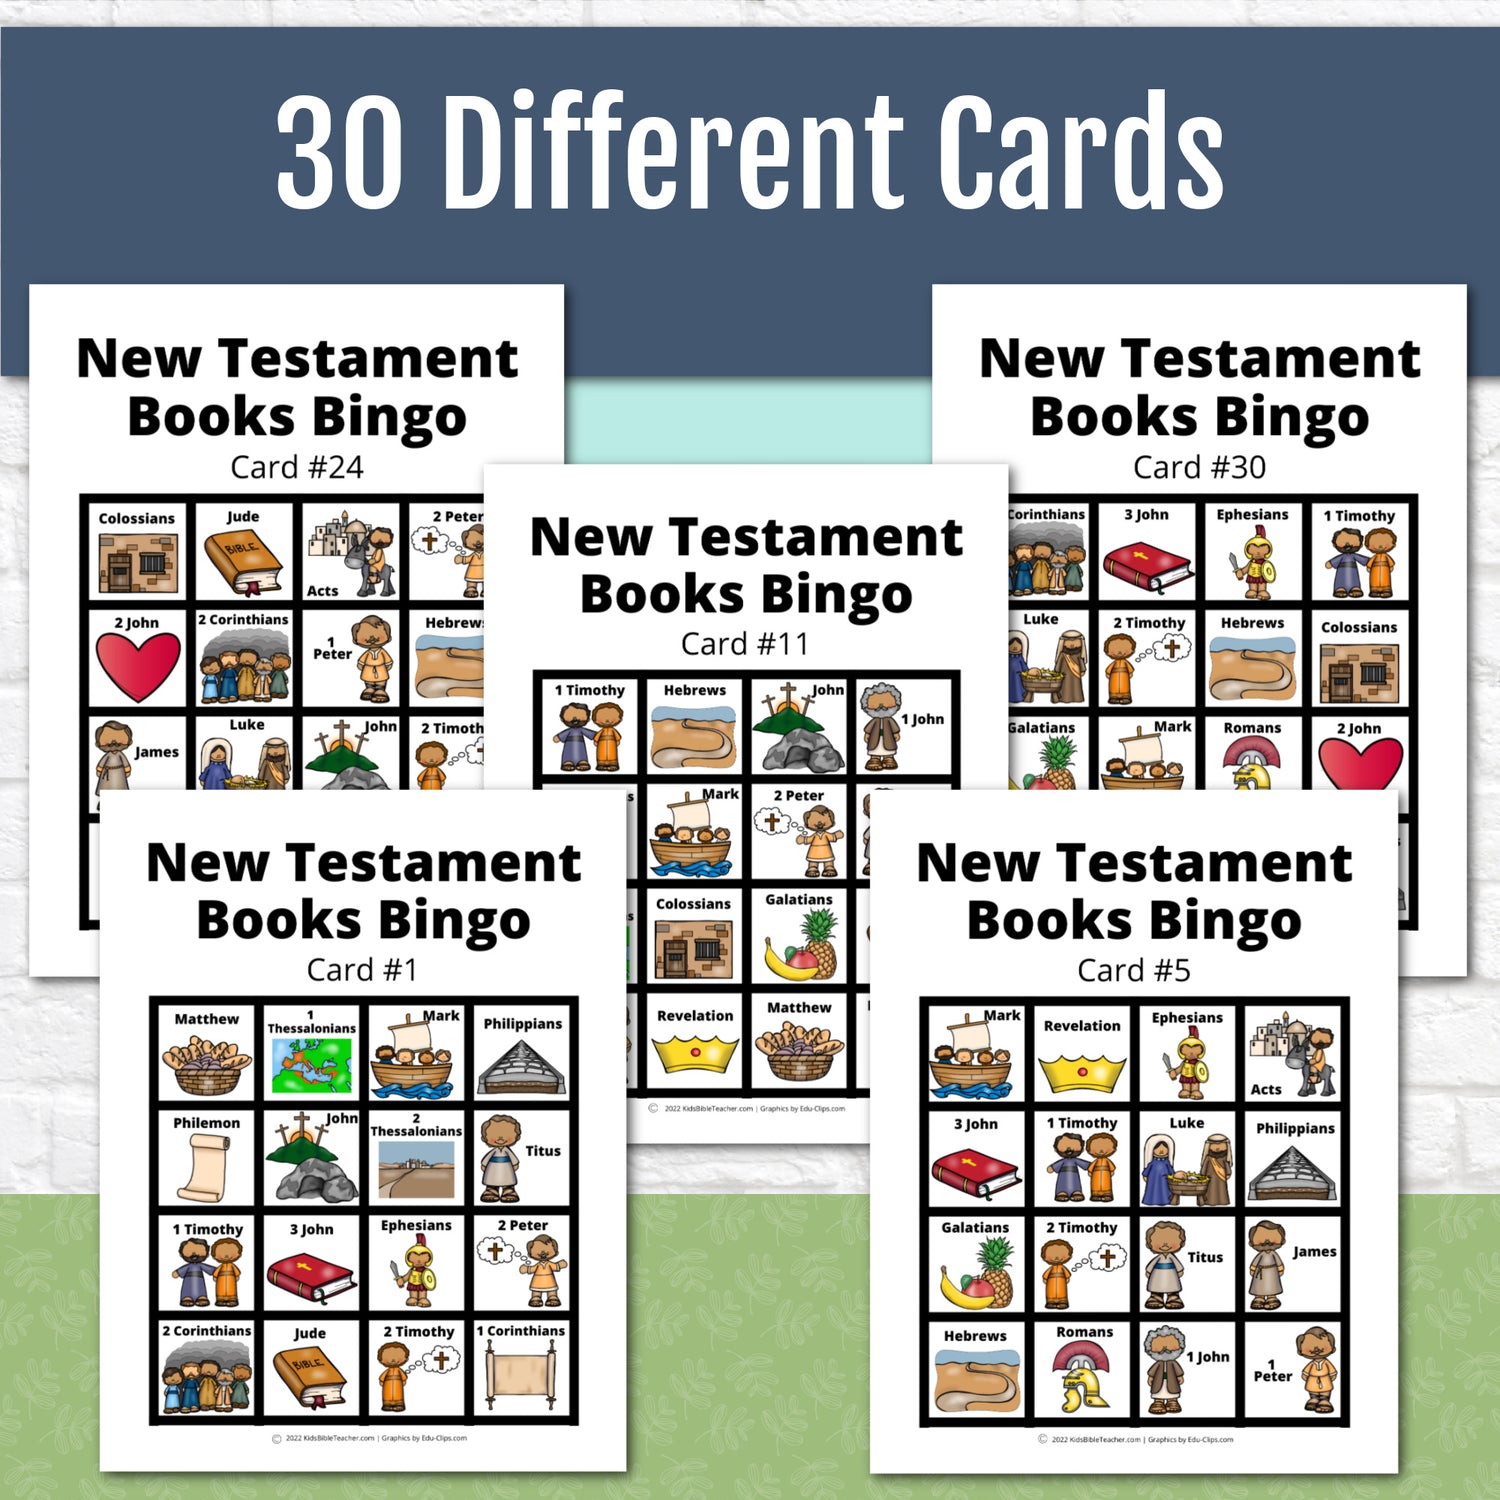 Bible Bingo - New Testament Bible Games for Youth